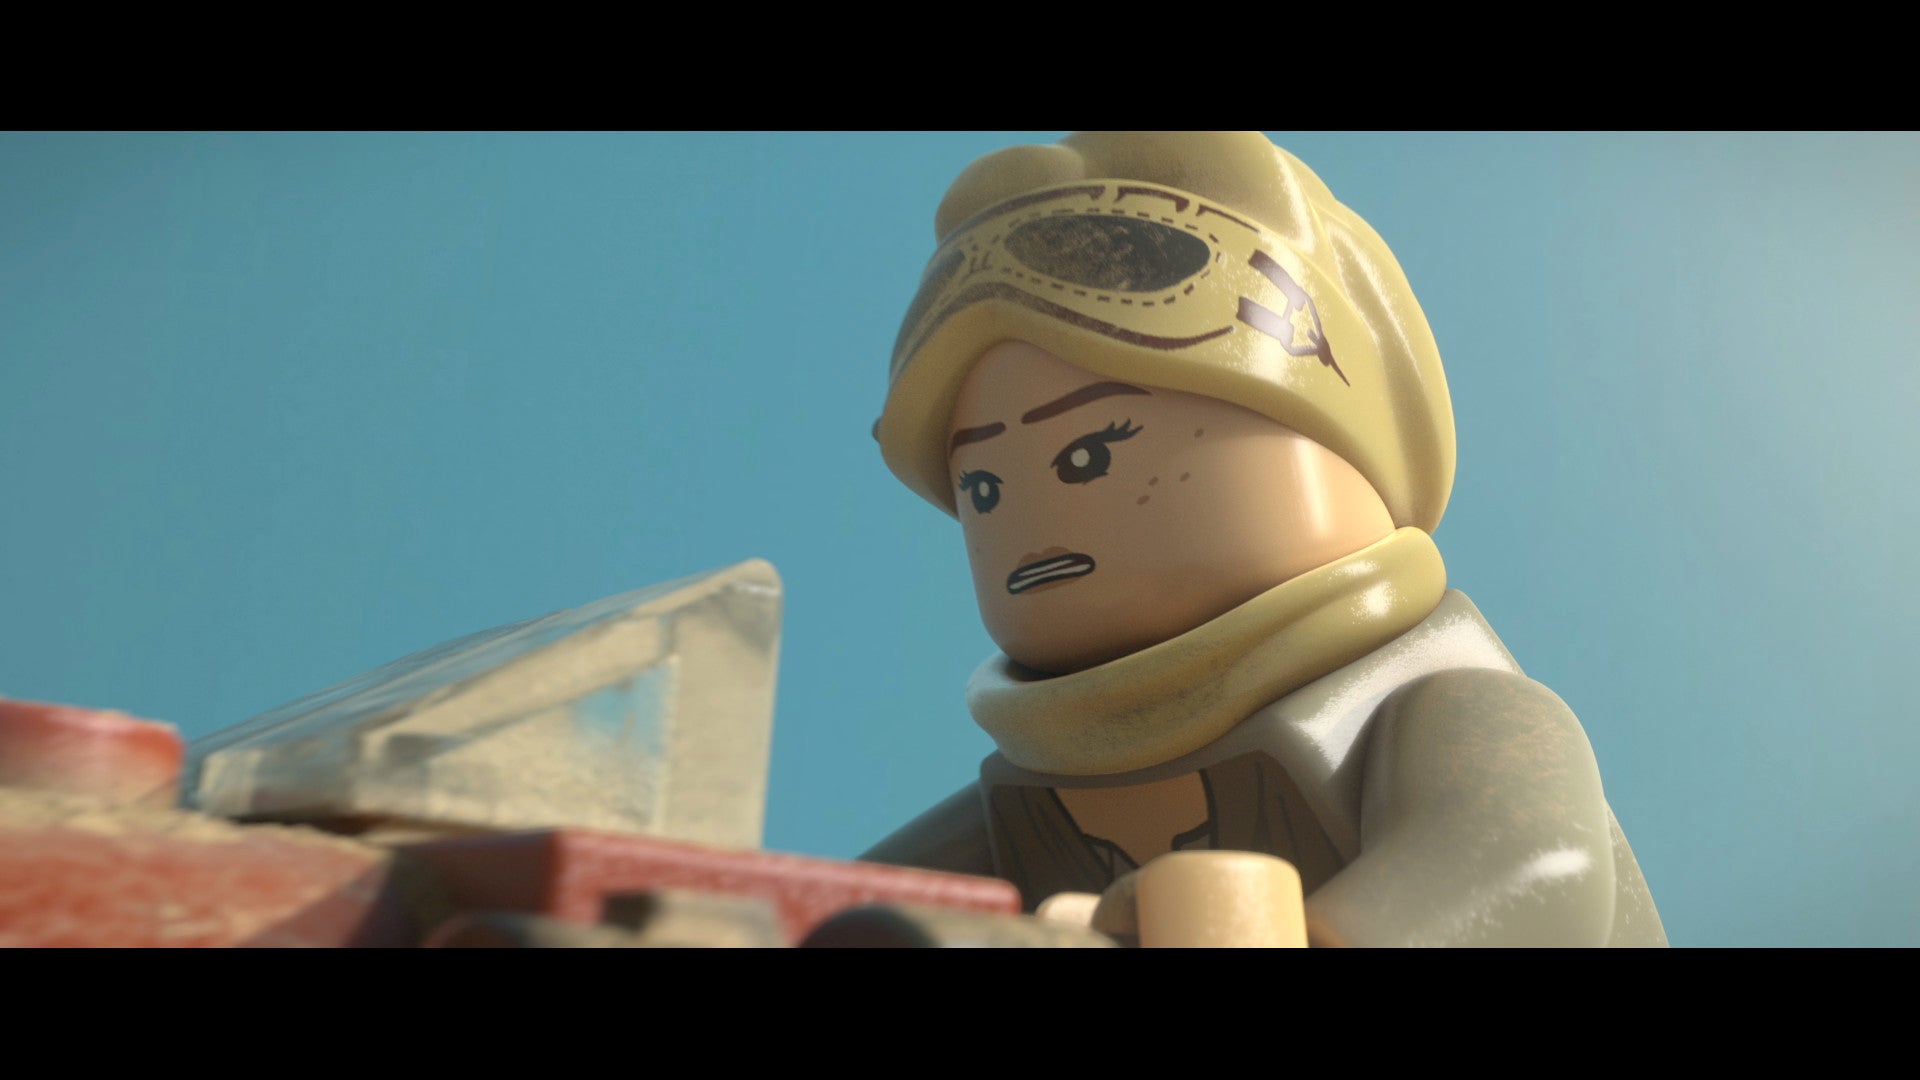 LEGO: STAR WARS - THE FORCE AWAKENS - STEAM - PC / MAC - WORLDWIDE - Libelula Vesela - Jocuri video